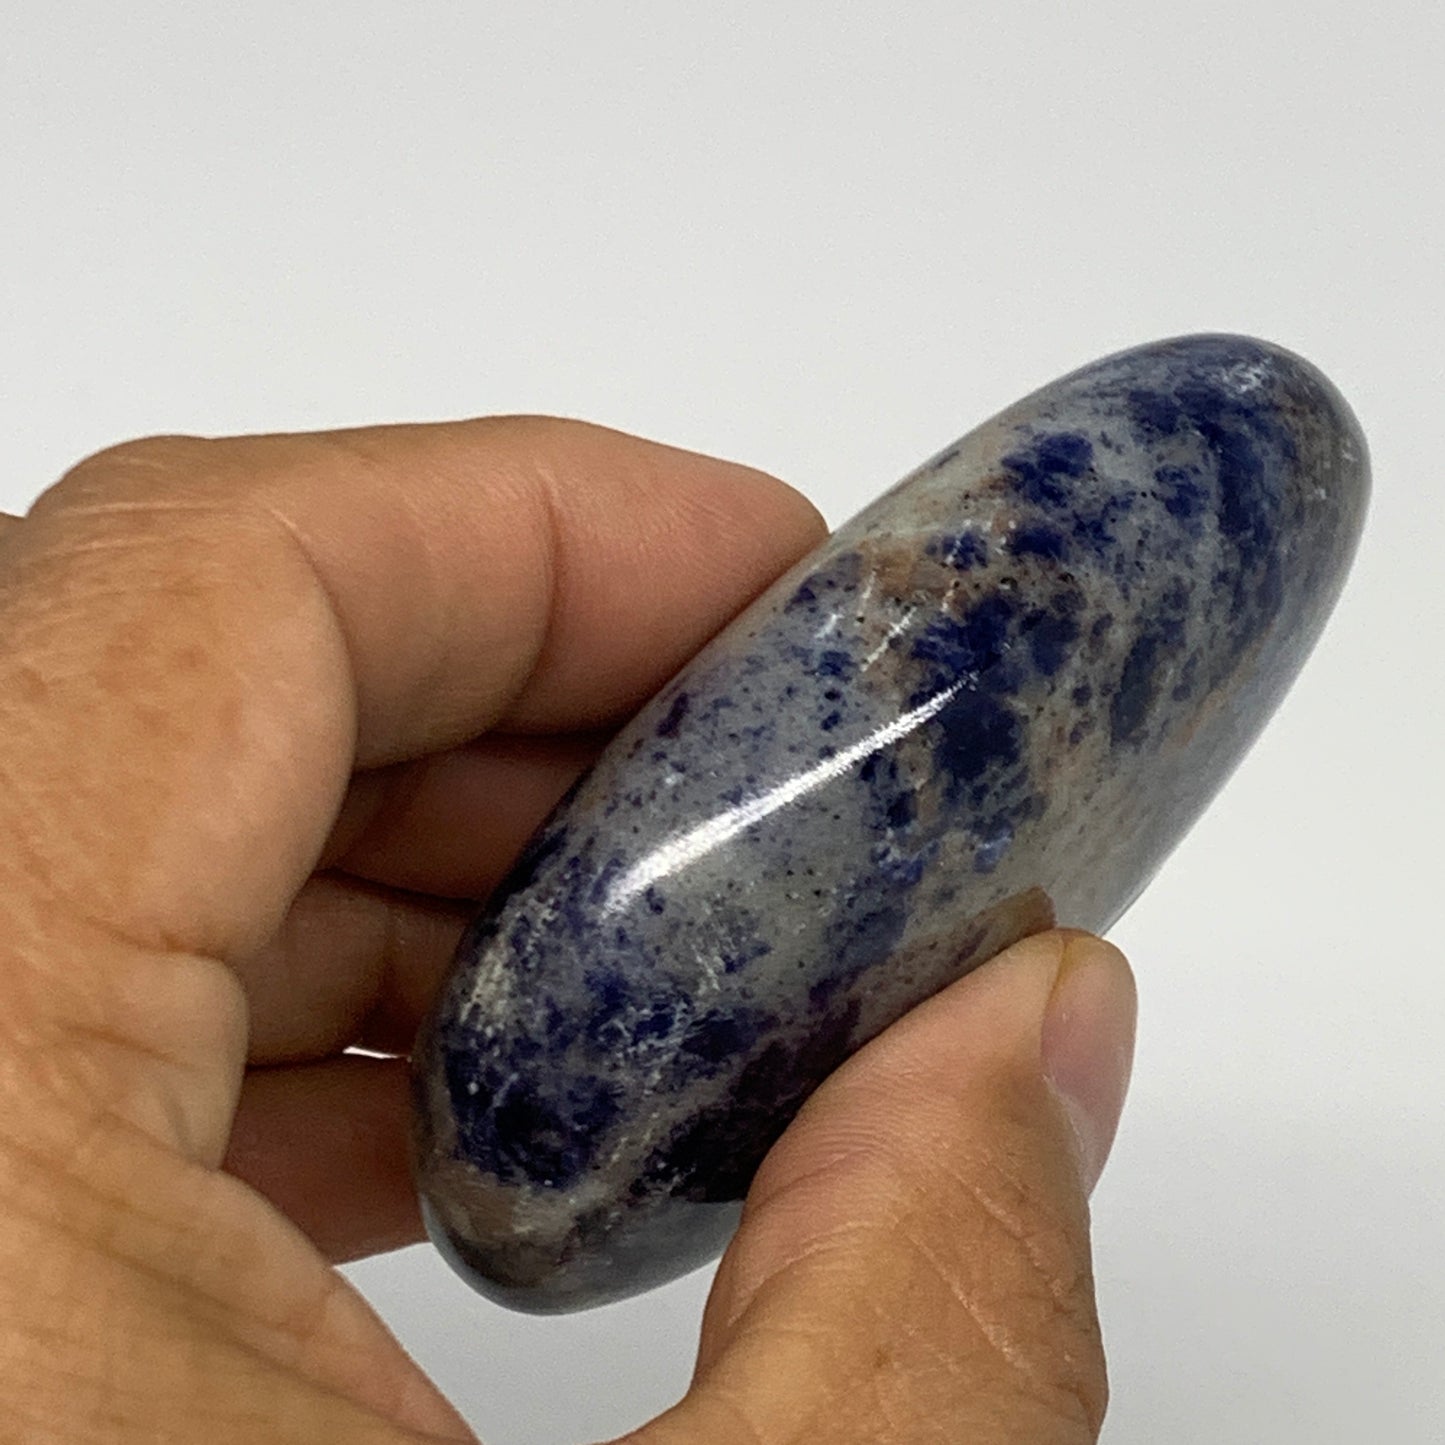 106.8g, 2.7"x1.7"x0.8", Sodalite Palm-Stone Crystal Polished Handmade, B21759